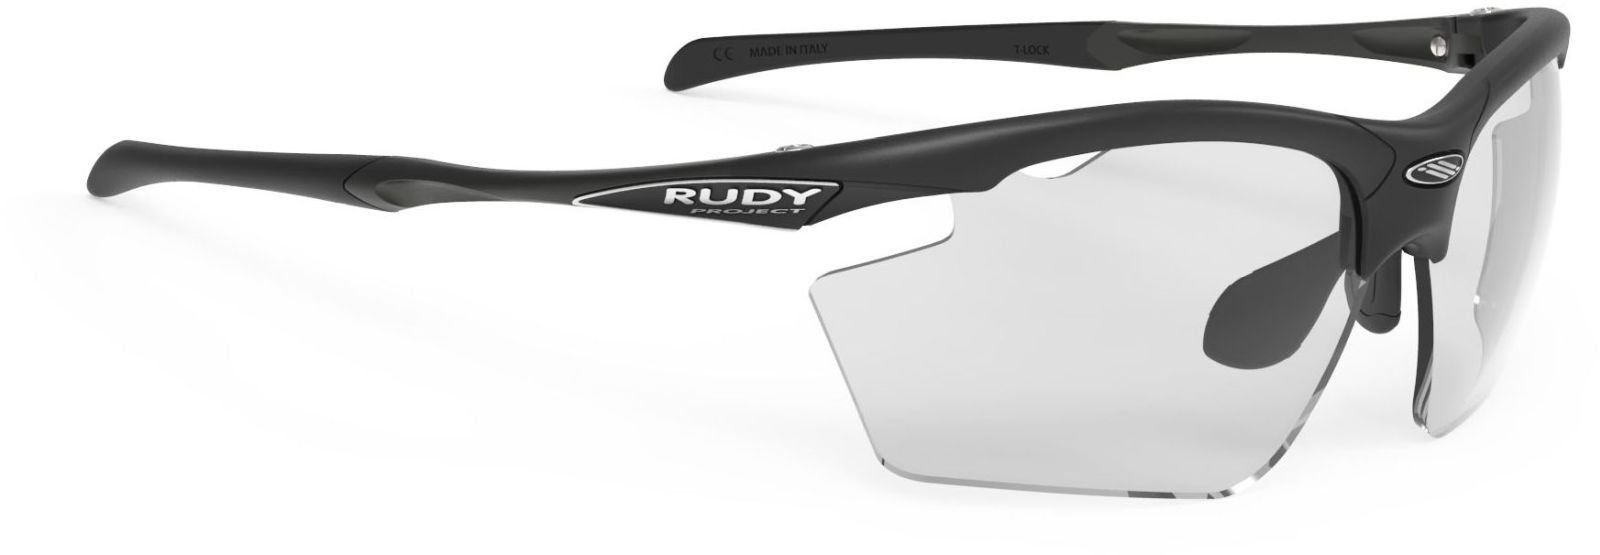 Brýle Rudy Project AGON ImpactX 2 Black - black gloss